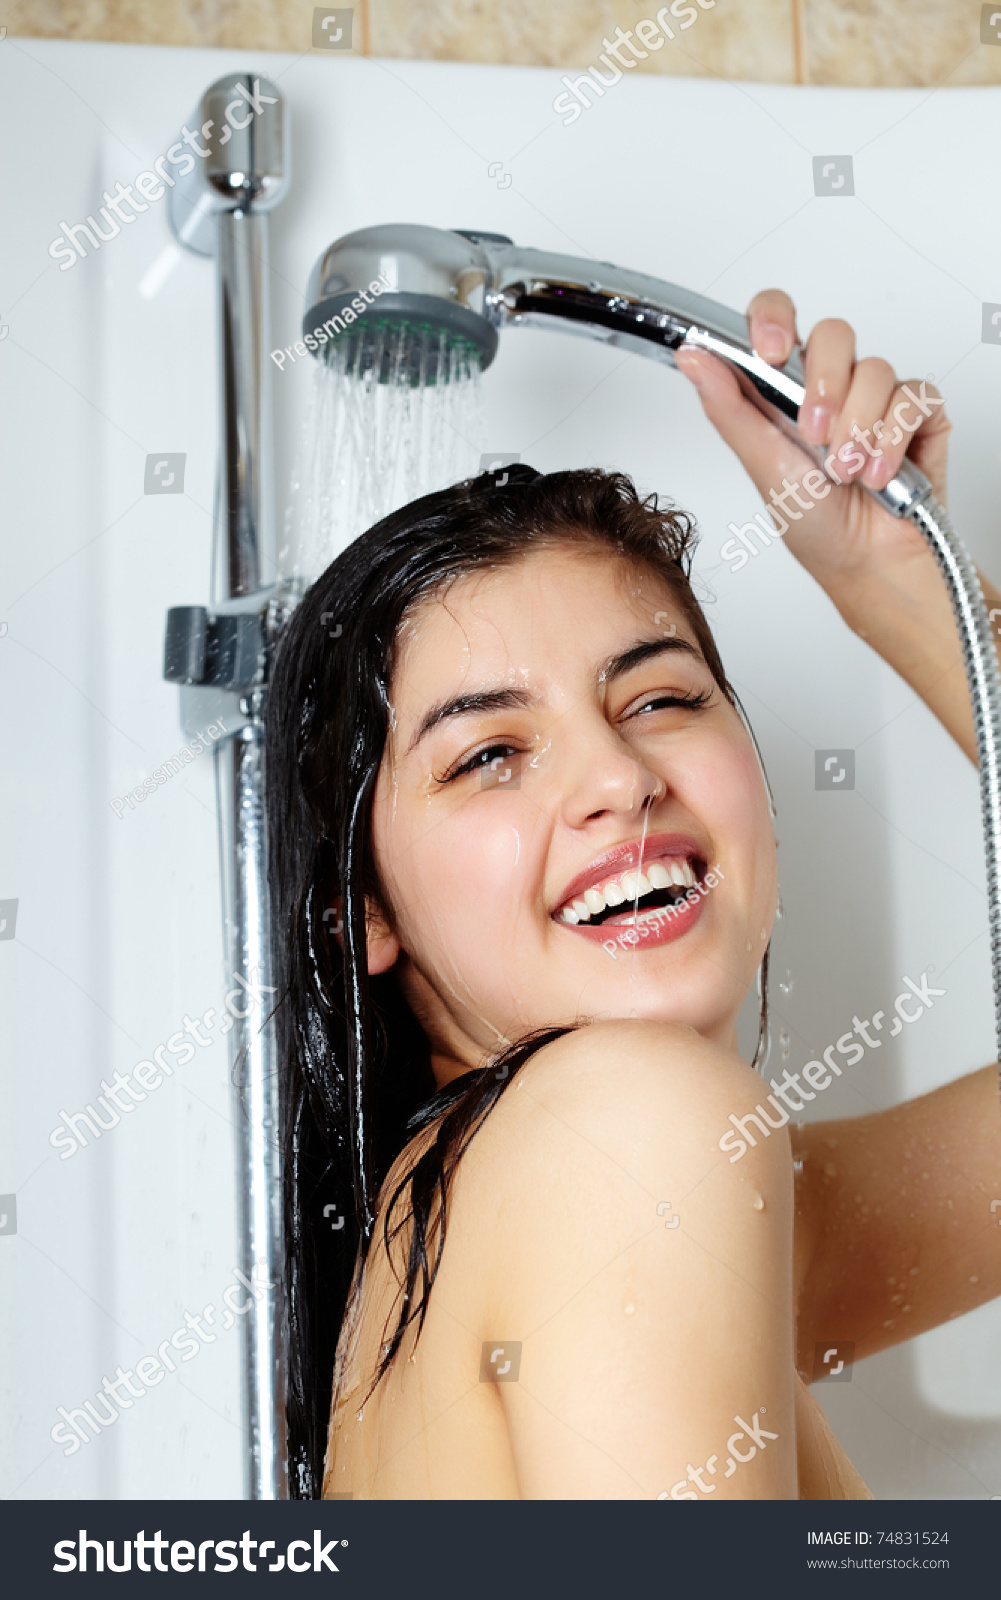 Girls Taking A Shower Together Telegraph